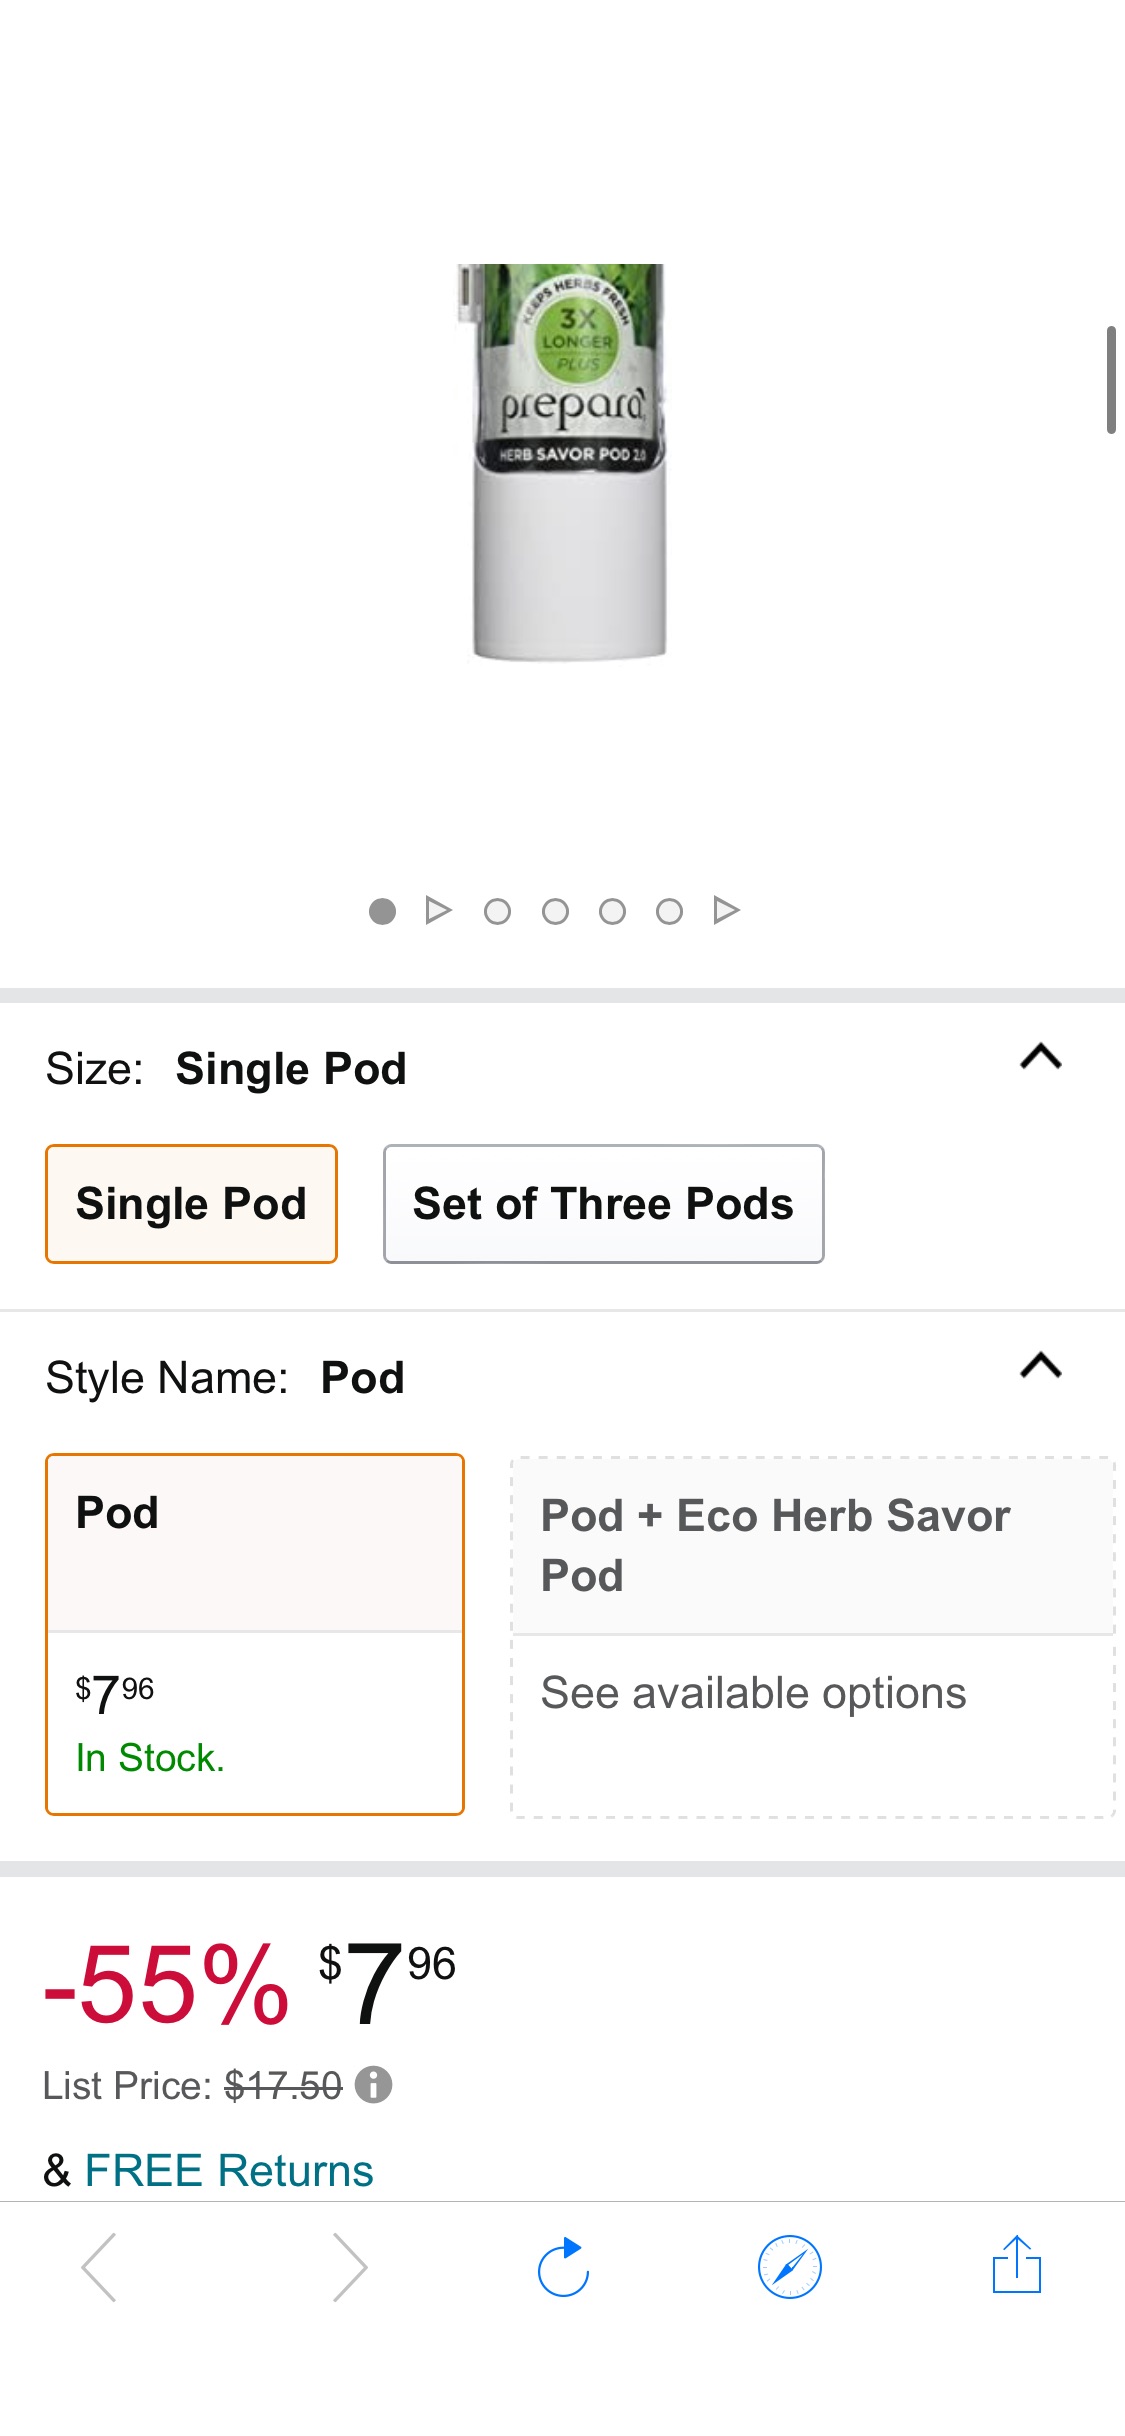 Amazon.com: Prepara Herb Savor Pod 2.0 -: Home & Kitchen